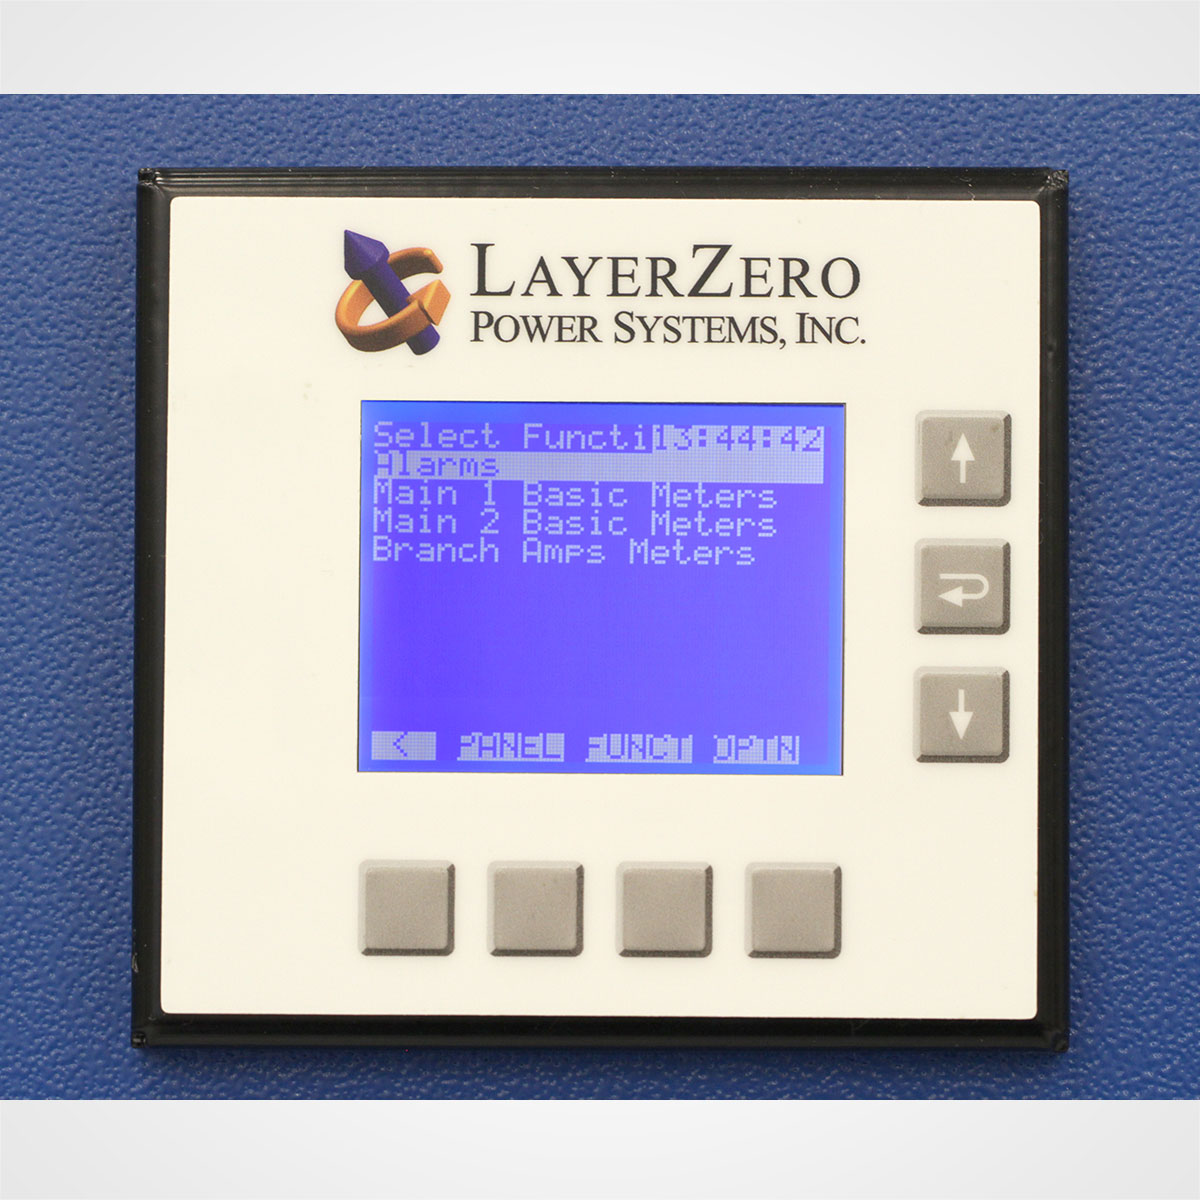 Two LayerZero Series 70: eRPP-FS Display.